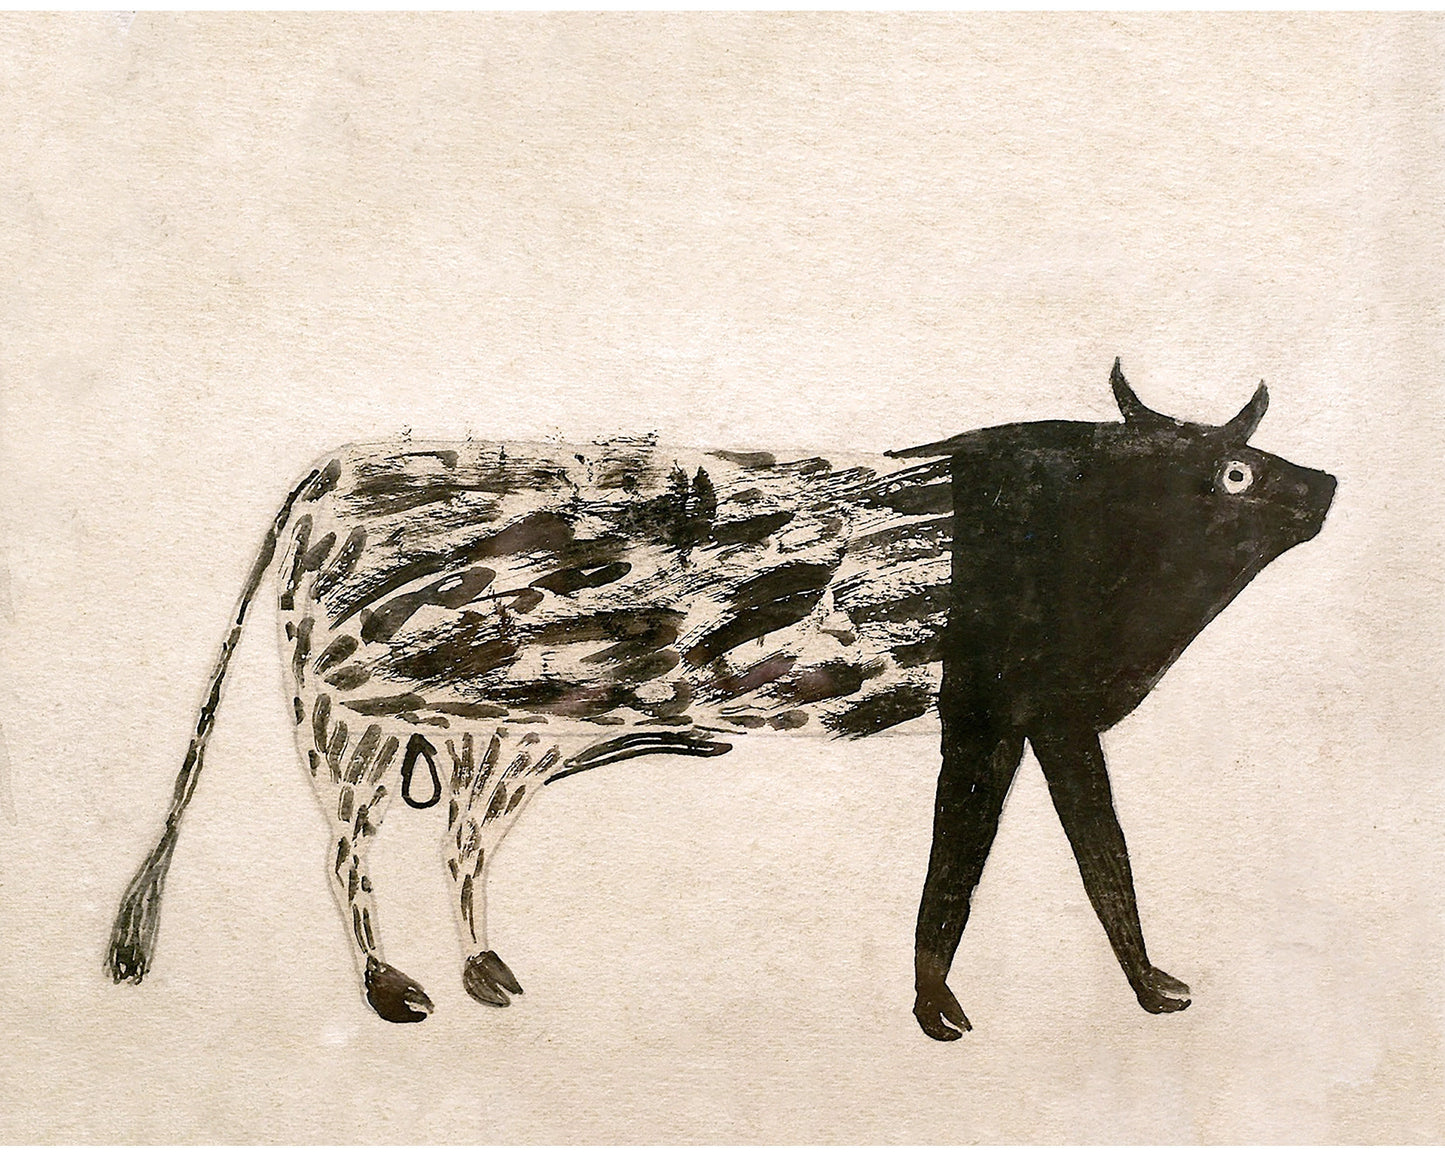 Bill Traylor Americana art | Spotted bull | Farm folk art | African American self-taught artist | Modern vintage wall décor